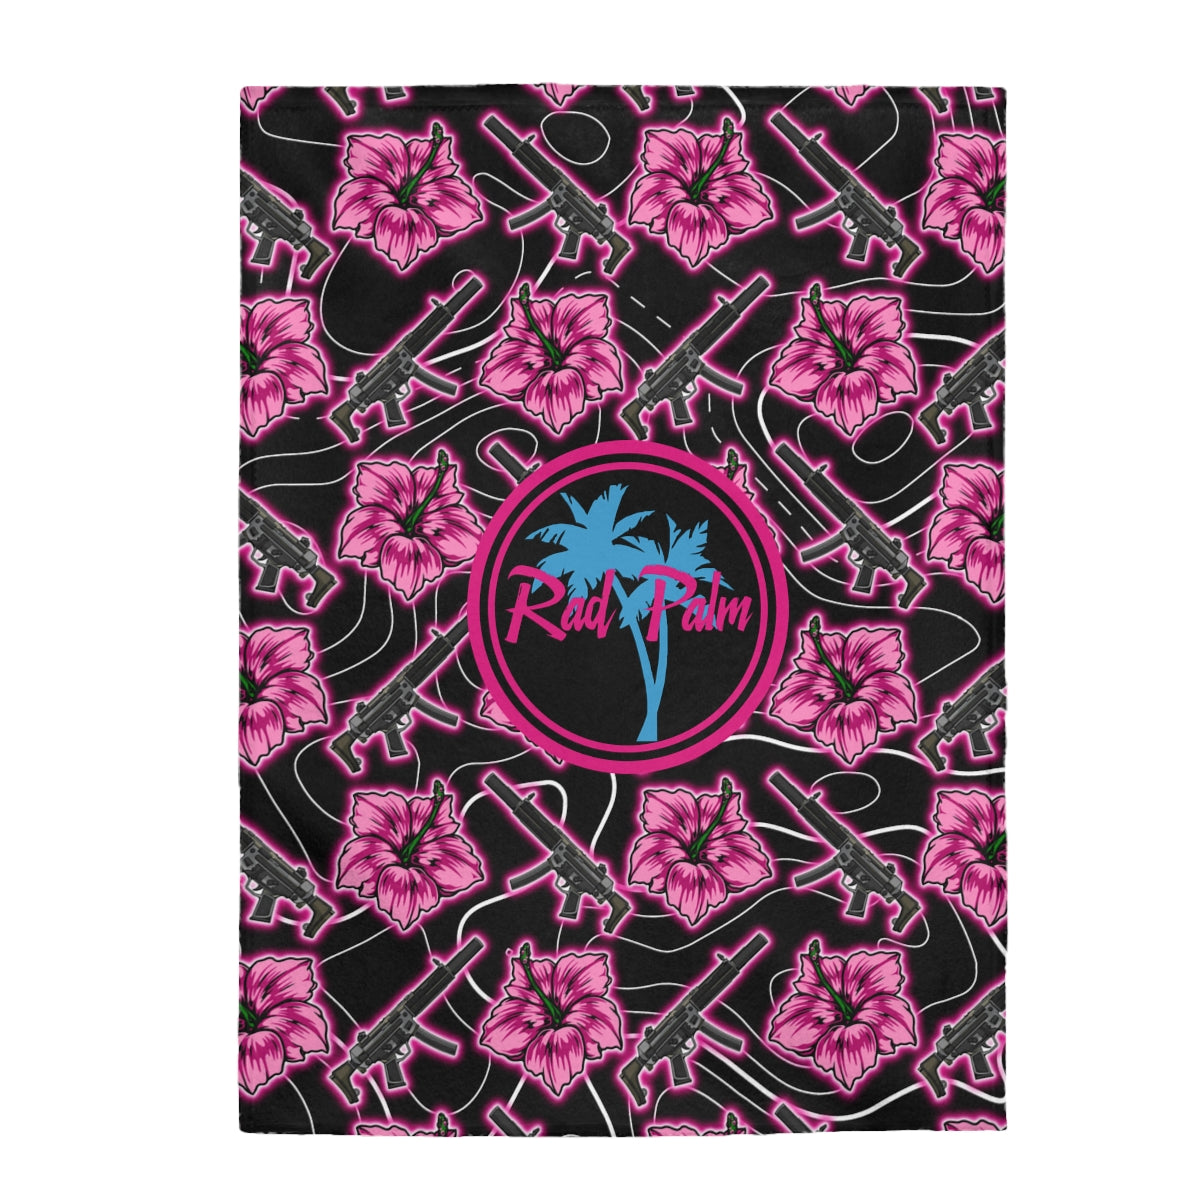 Rad Palm High Capacity Hibiscus Black Neon Velveteen Plush Blanket